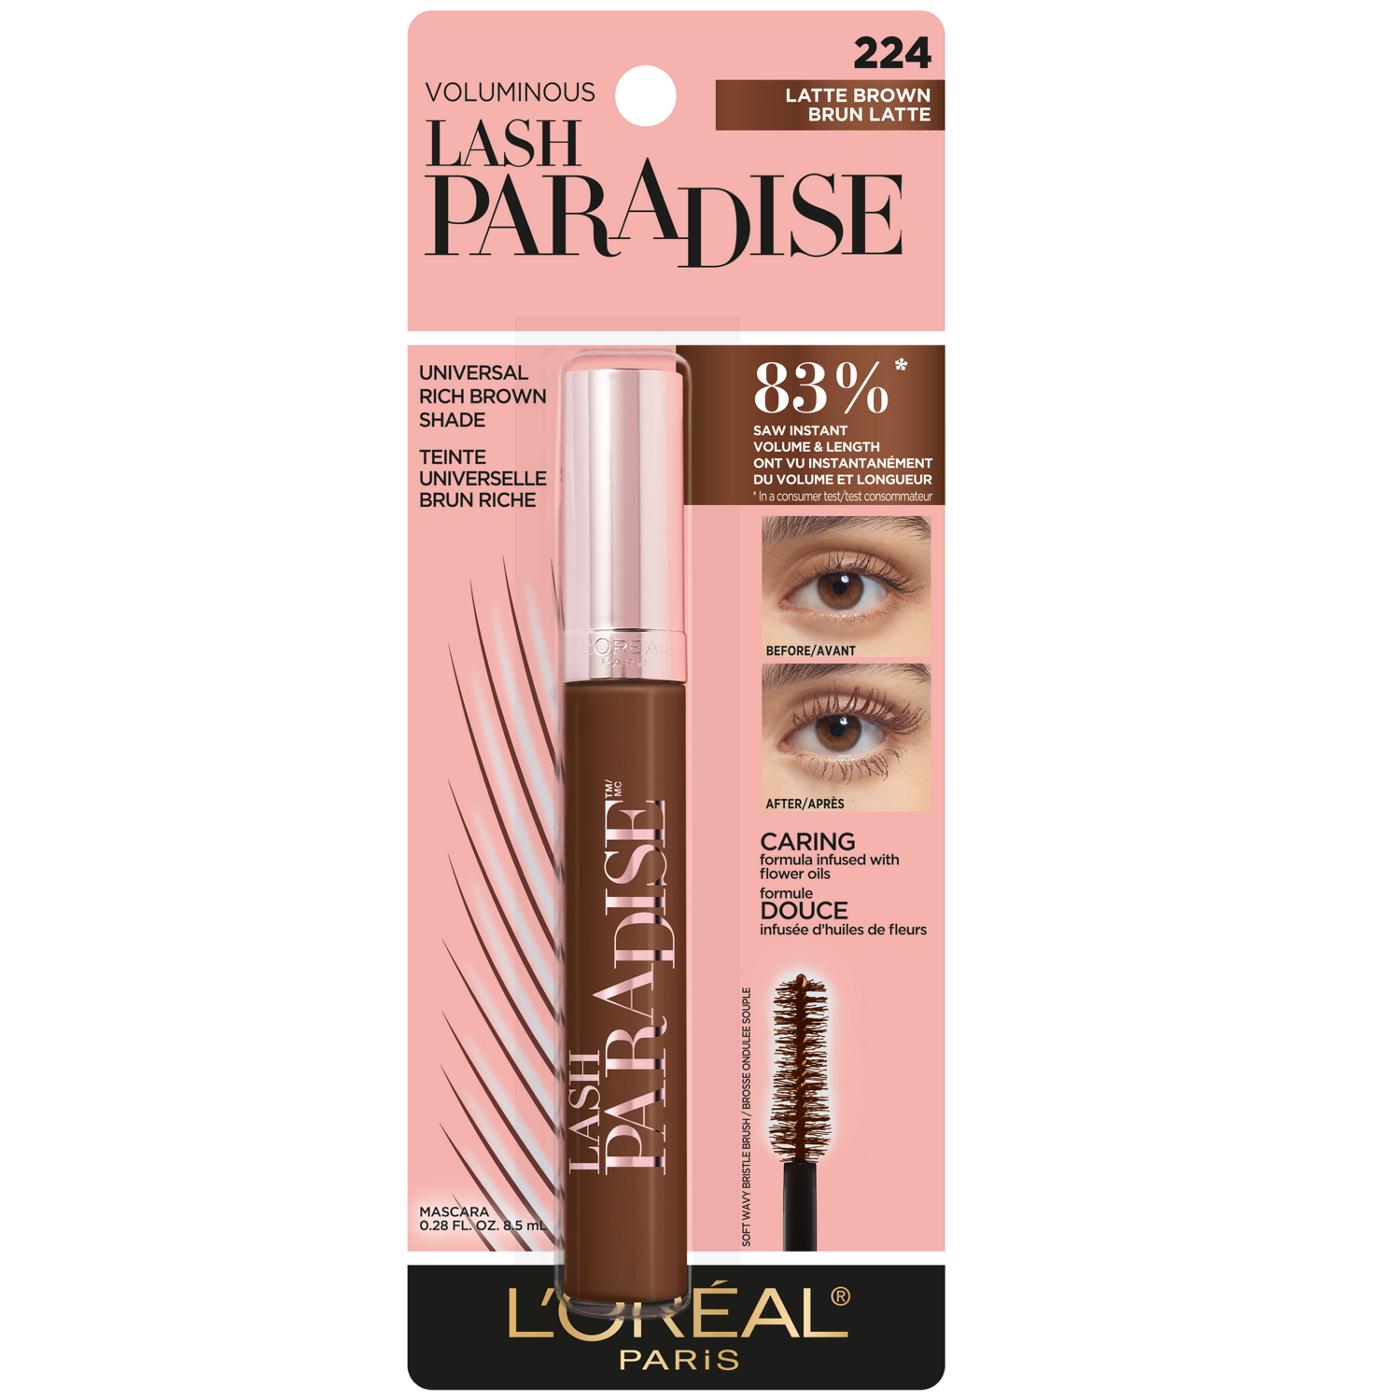 L'Oréal Paris Voluminous Lash Paradise Mascara - Latte Brown; image 1 of 7